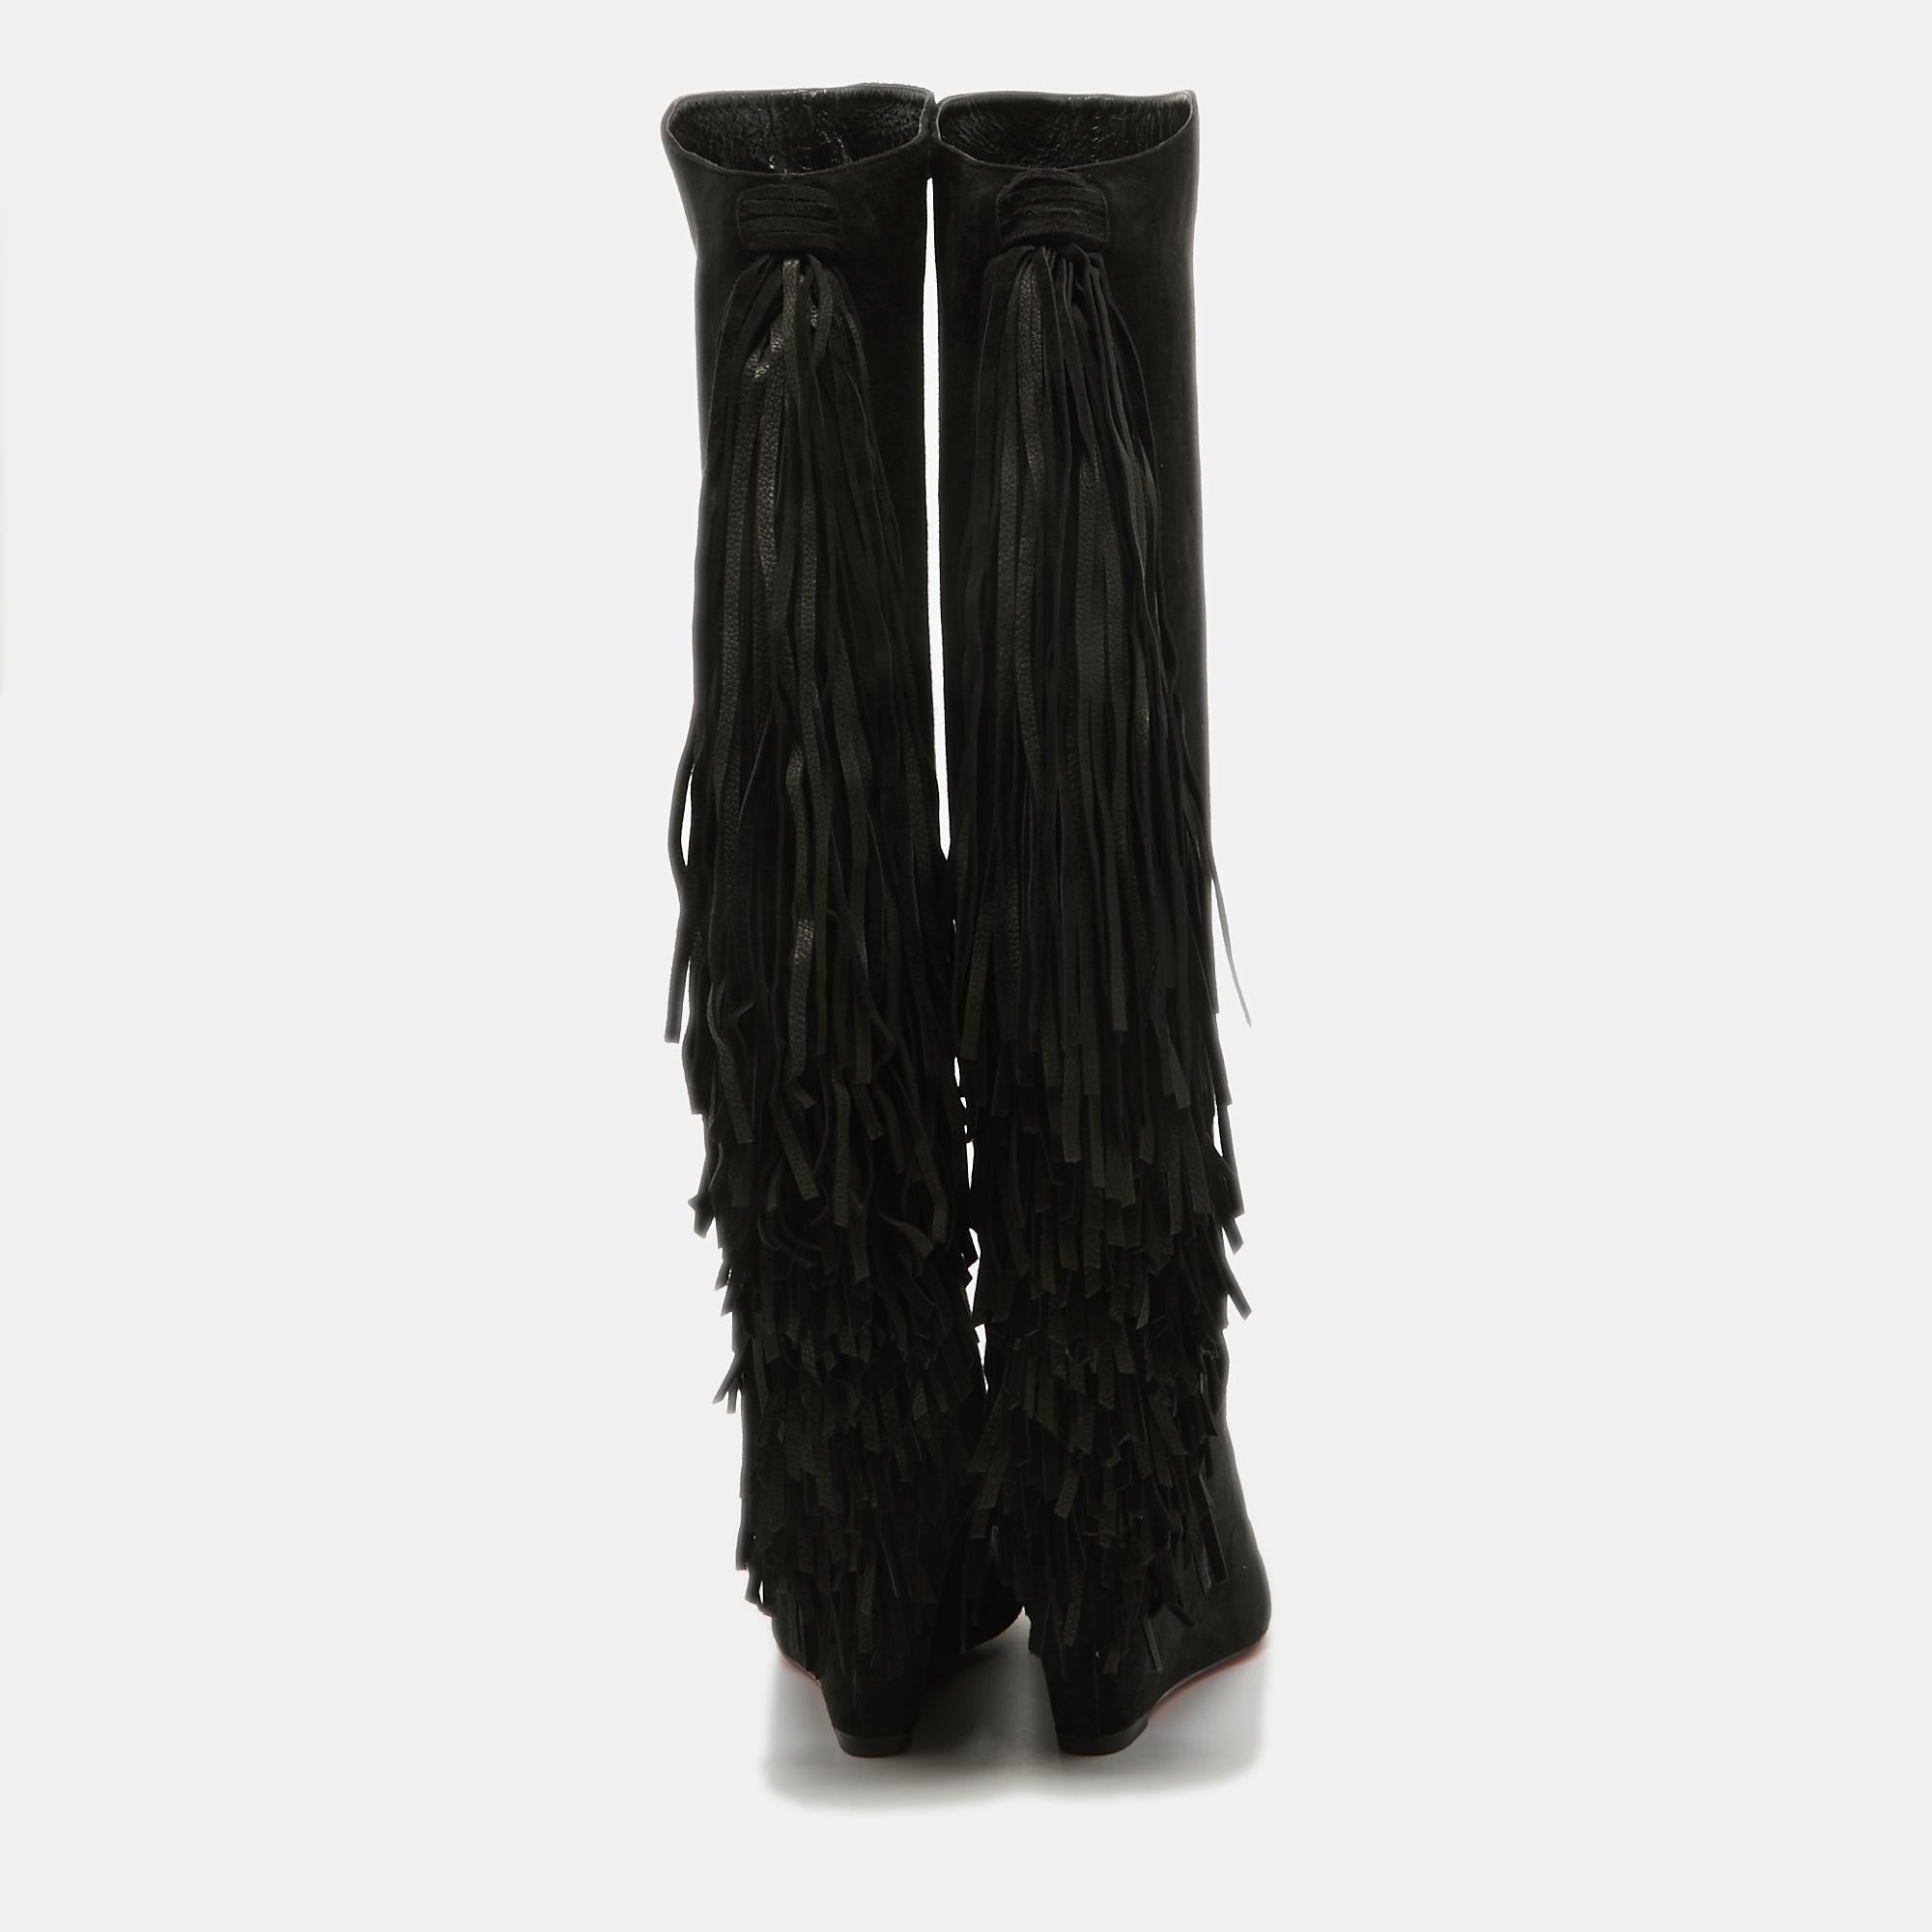 Christian Louboutin Black Suede Knee Length Boots Size 36 In Excellent Condition For Sale In Dubai, Al Qouz 2